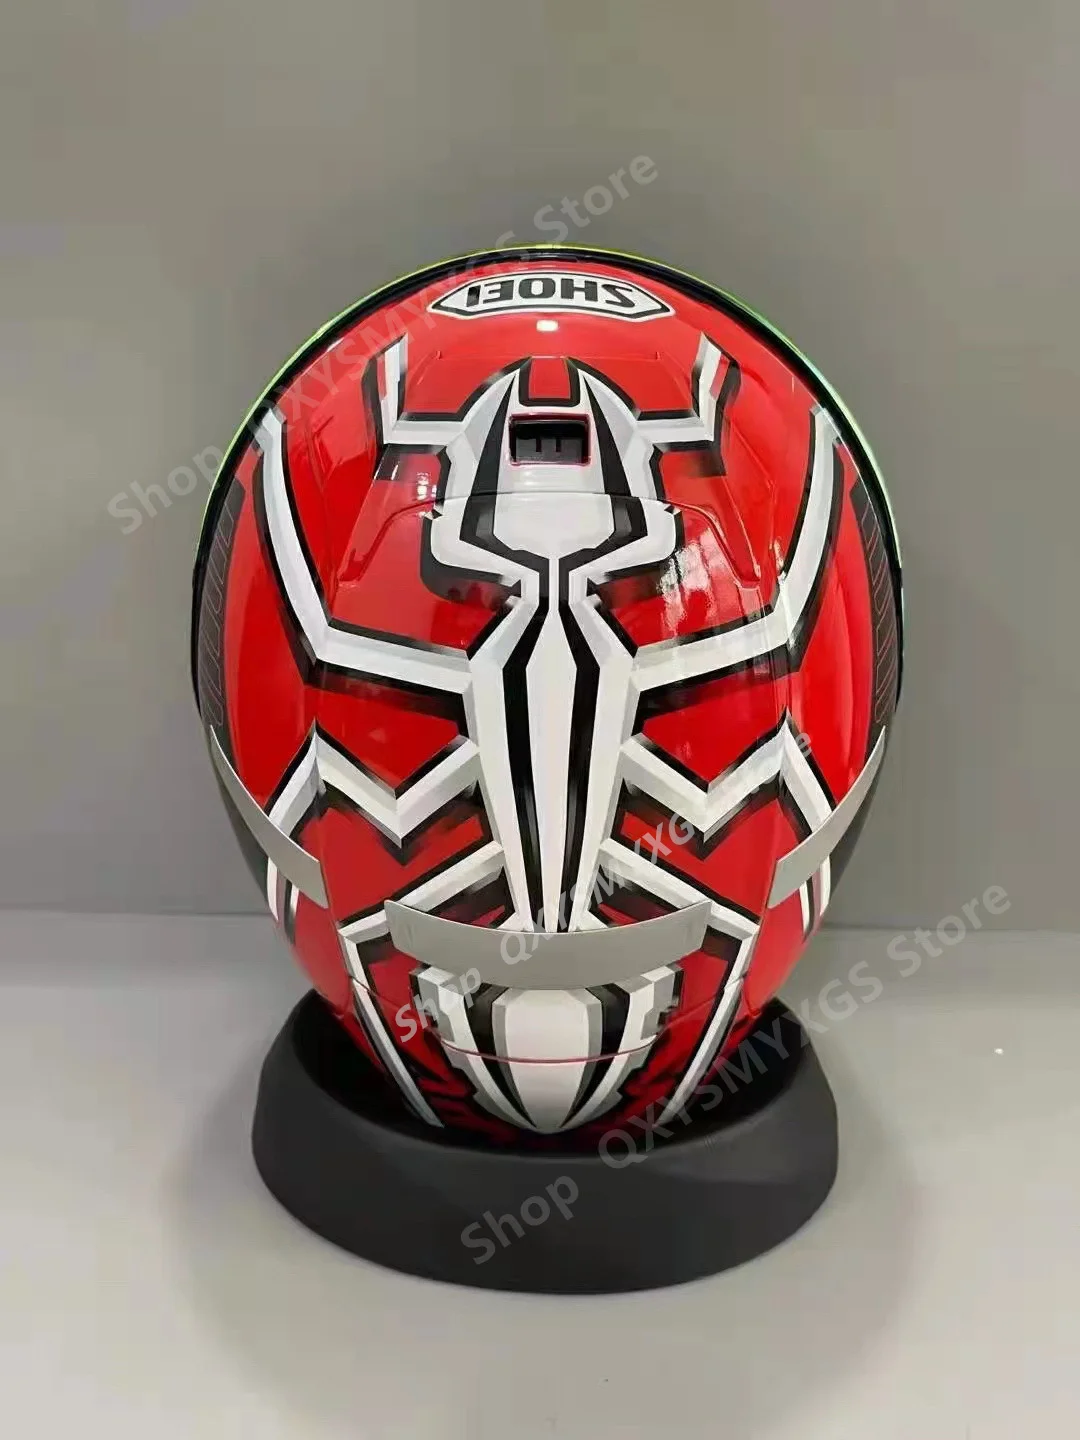 

X-Fourteen Full Face Motorcycle Helmet SHOEI X14 red ant Helmet Motocross Racing Motorbike Riding Helmet